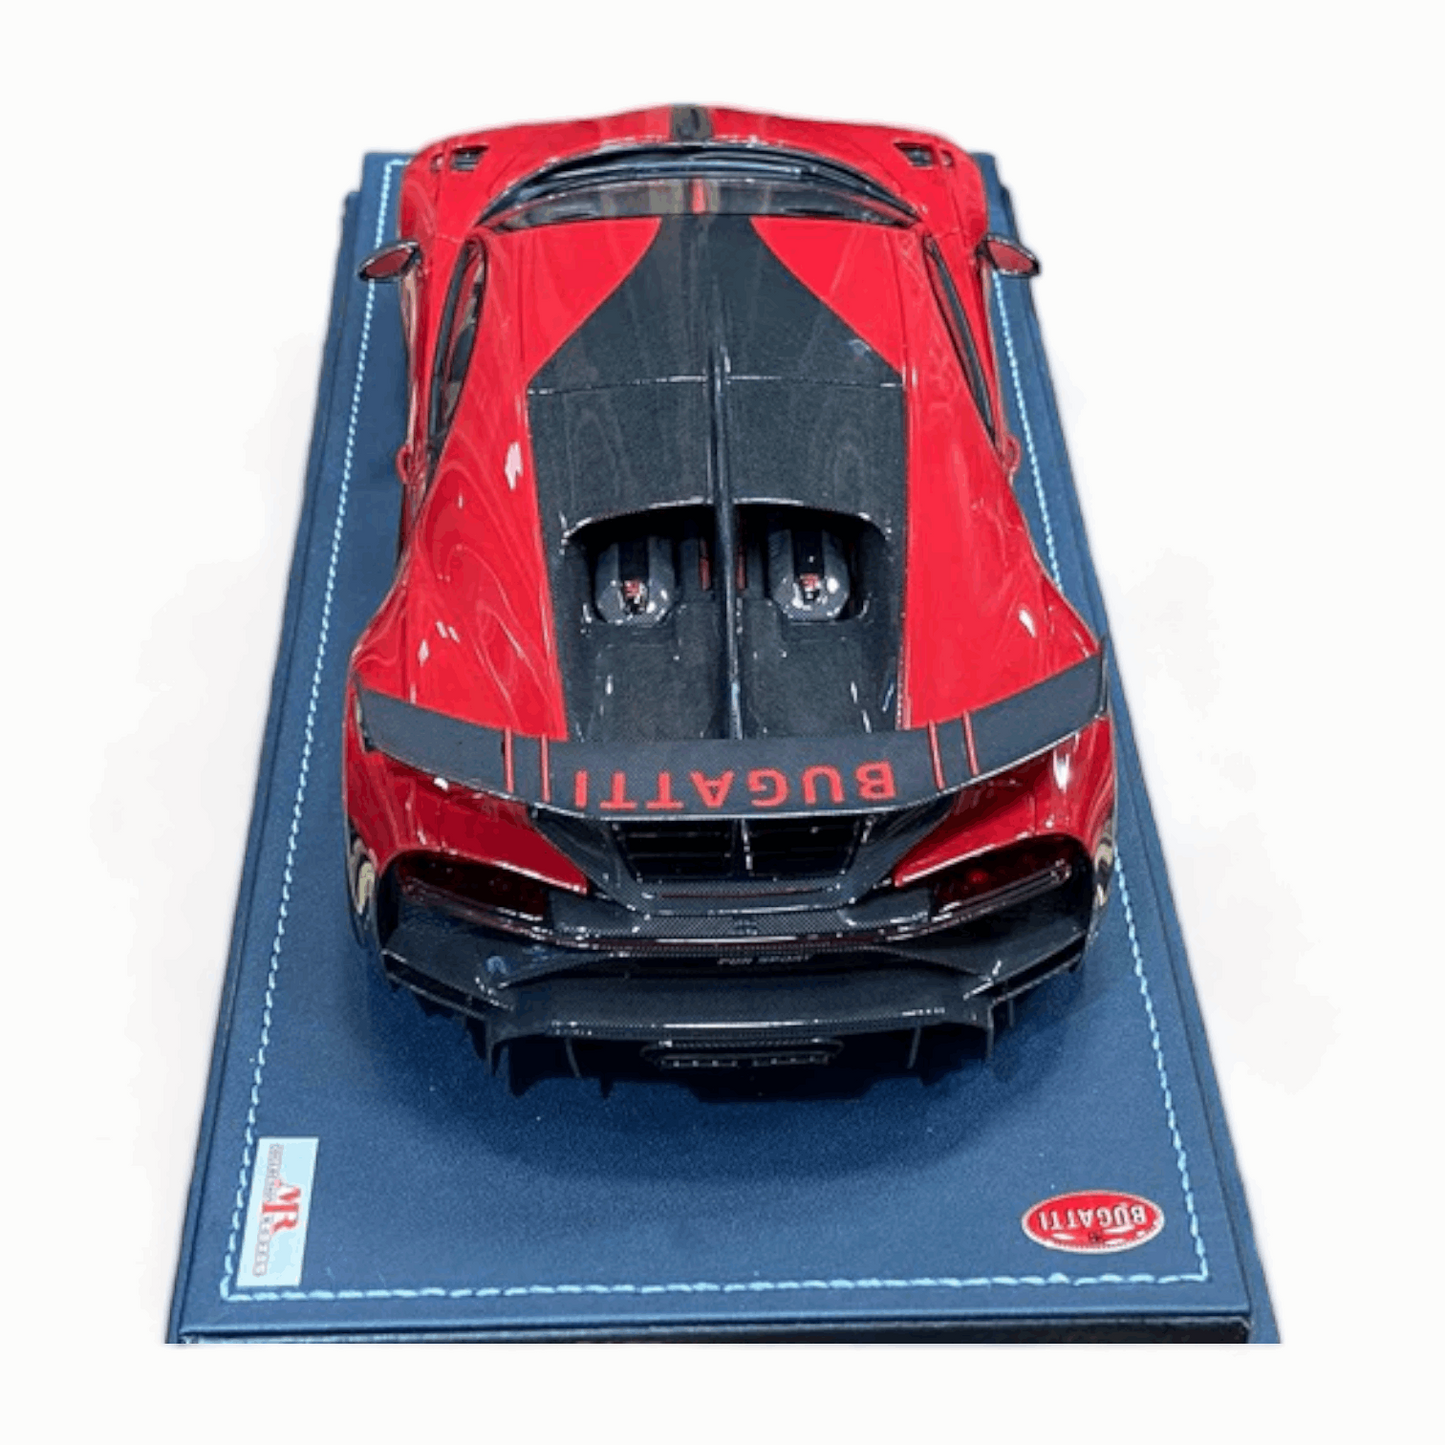 1/18 Bugatti Chiron Pur Sport 10/69 Italian Red by MR Collection|Sold in Dturman.com Dubai UAE.